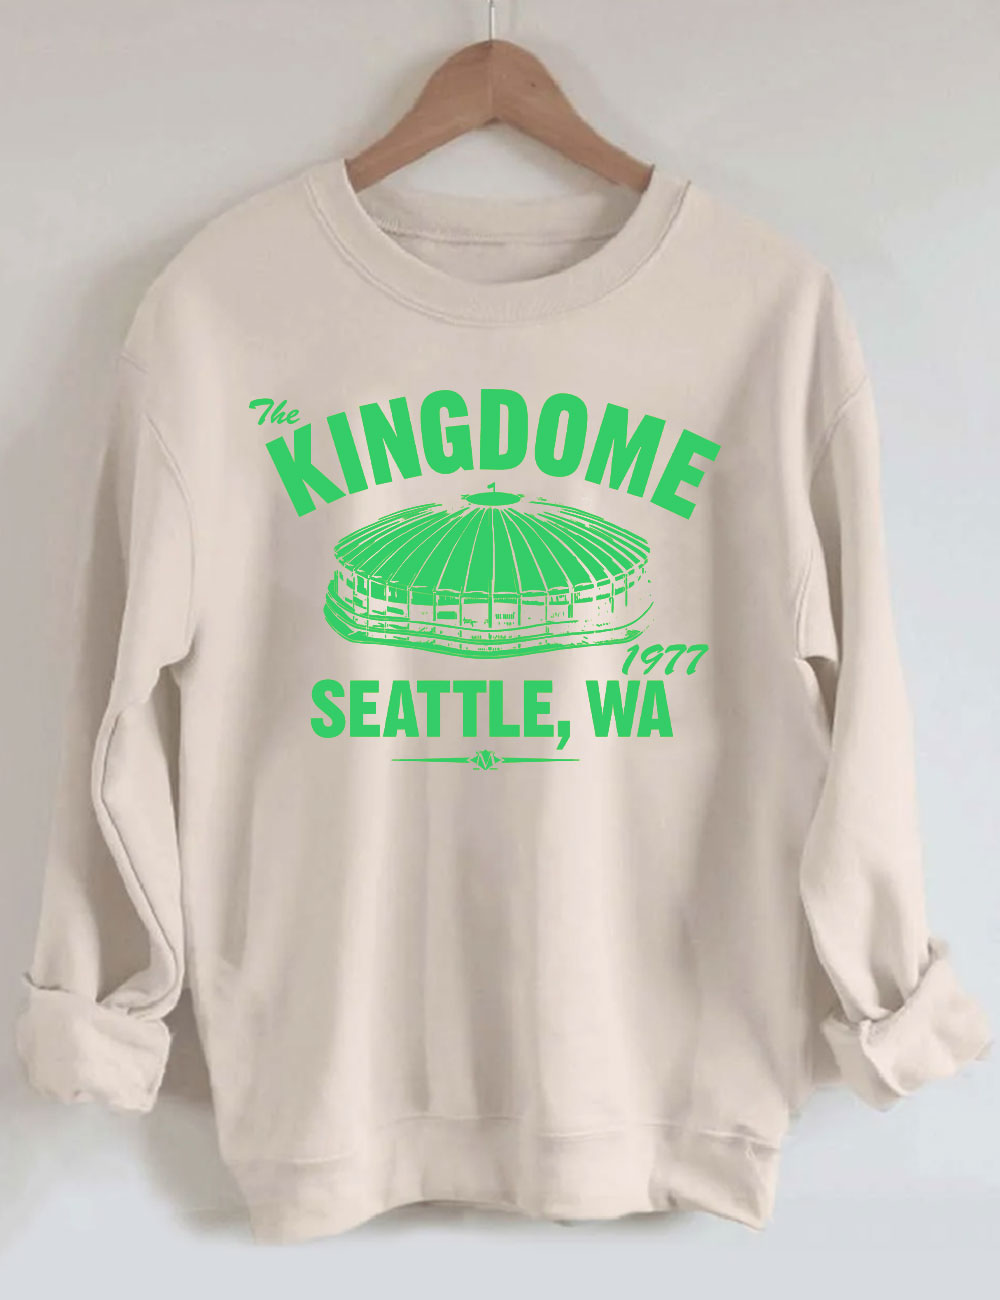 The Kingdome 1977 Baseball Sweatshirt